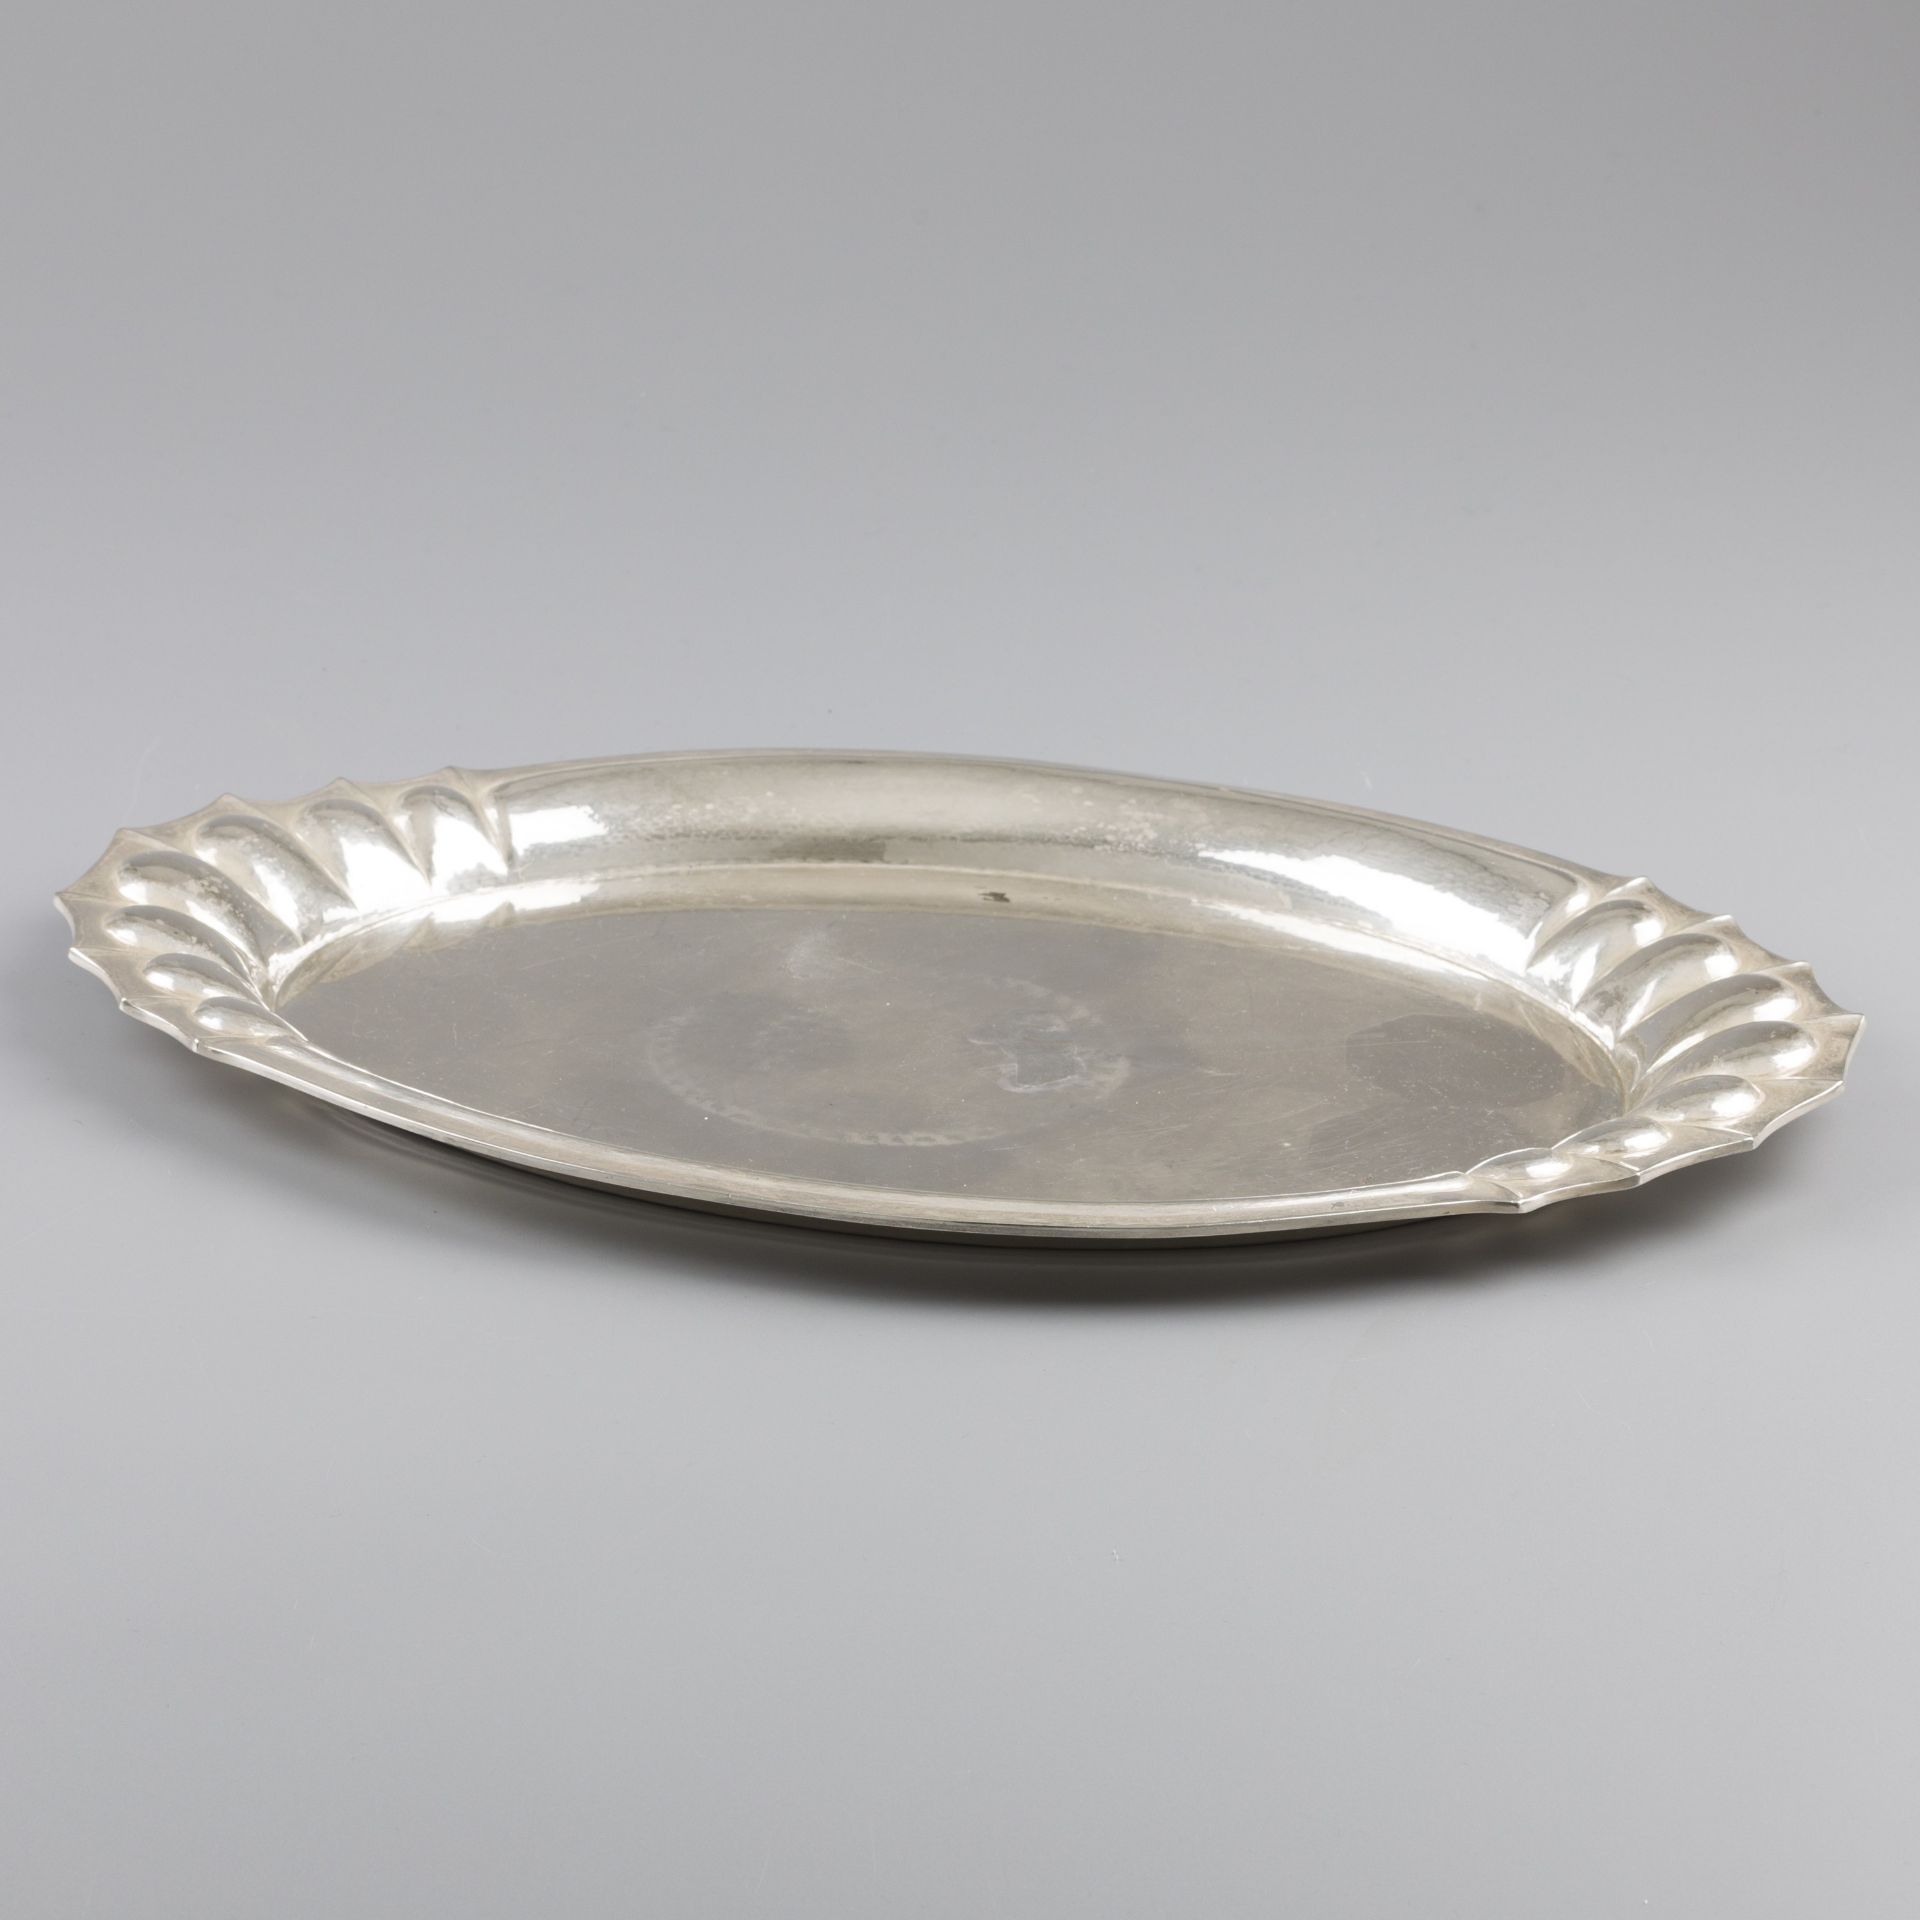 Showpiece tray, silver. - Image 2 of 3